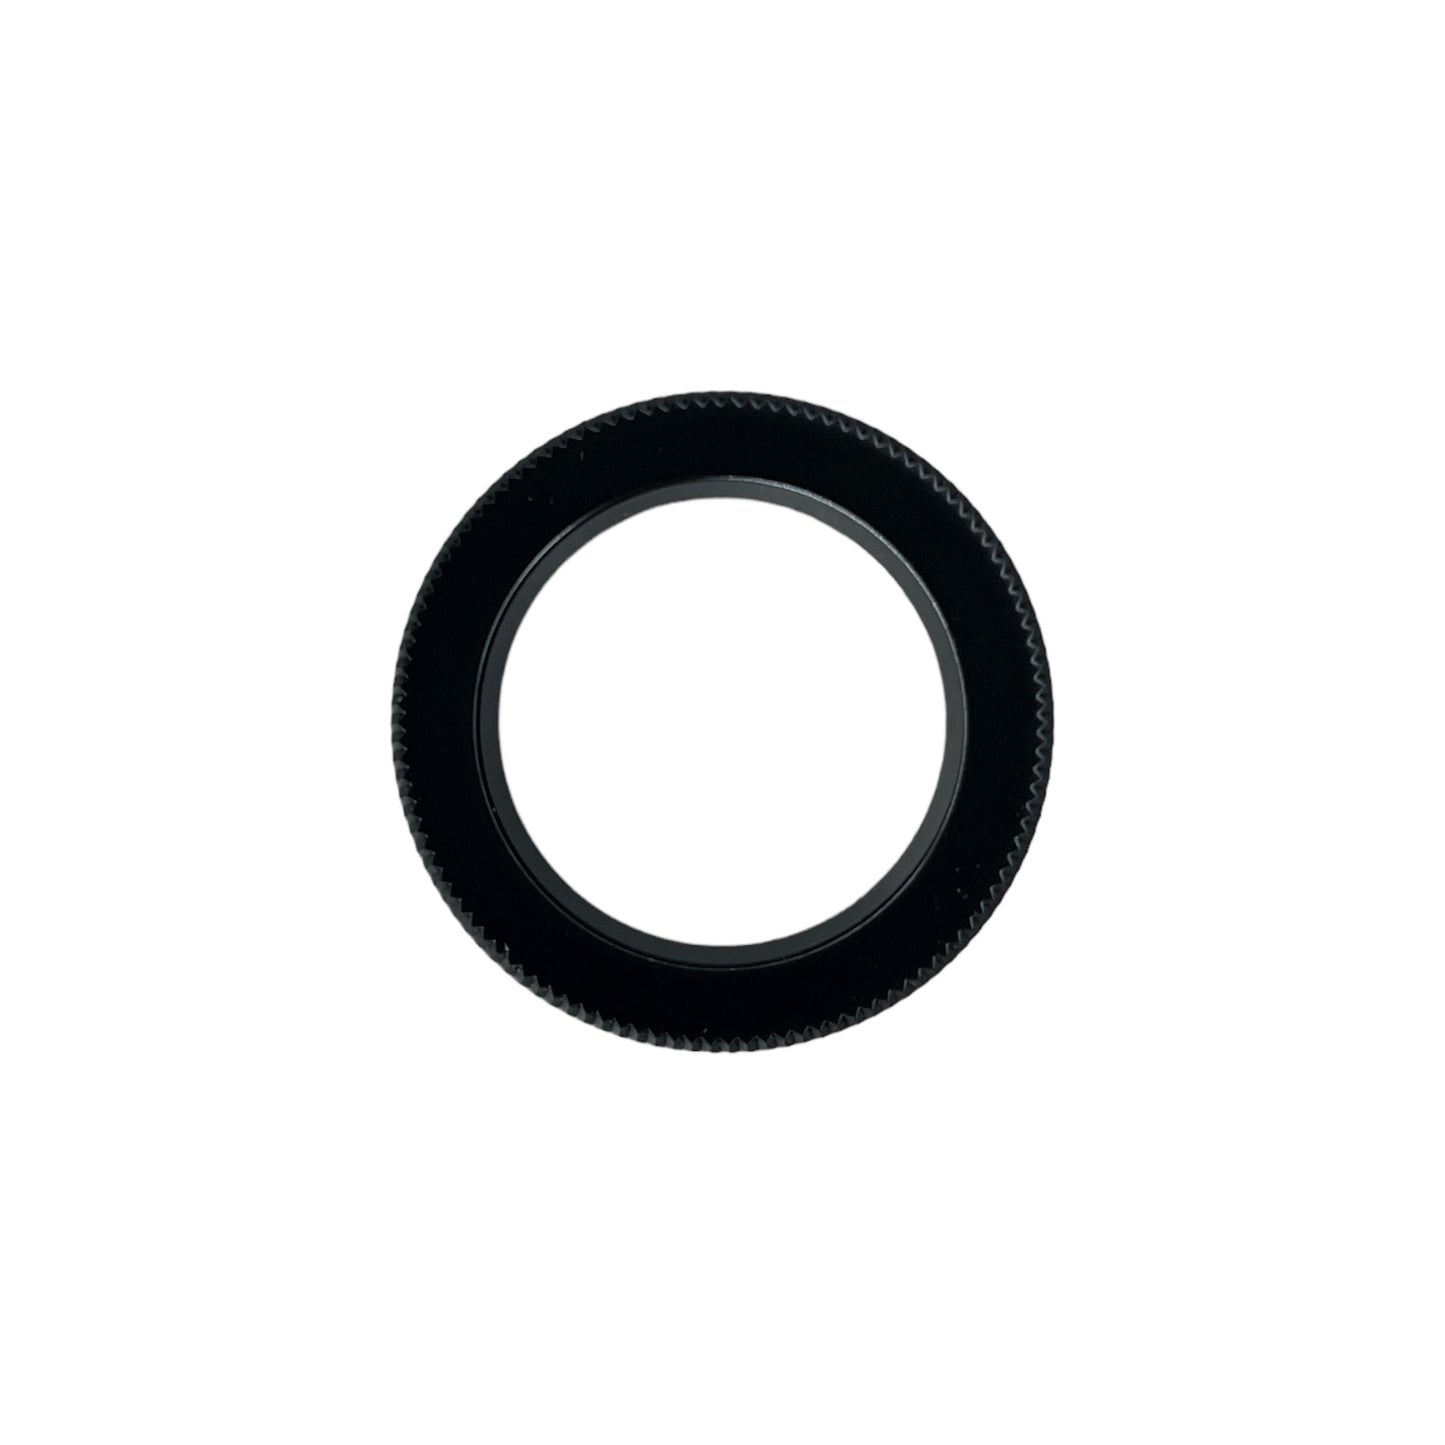 Canon F1 Eye Level Finder Eye Piece Ring